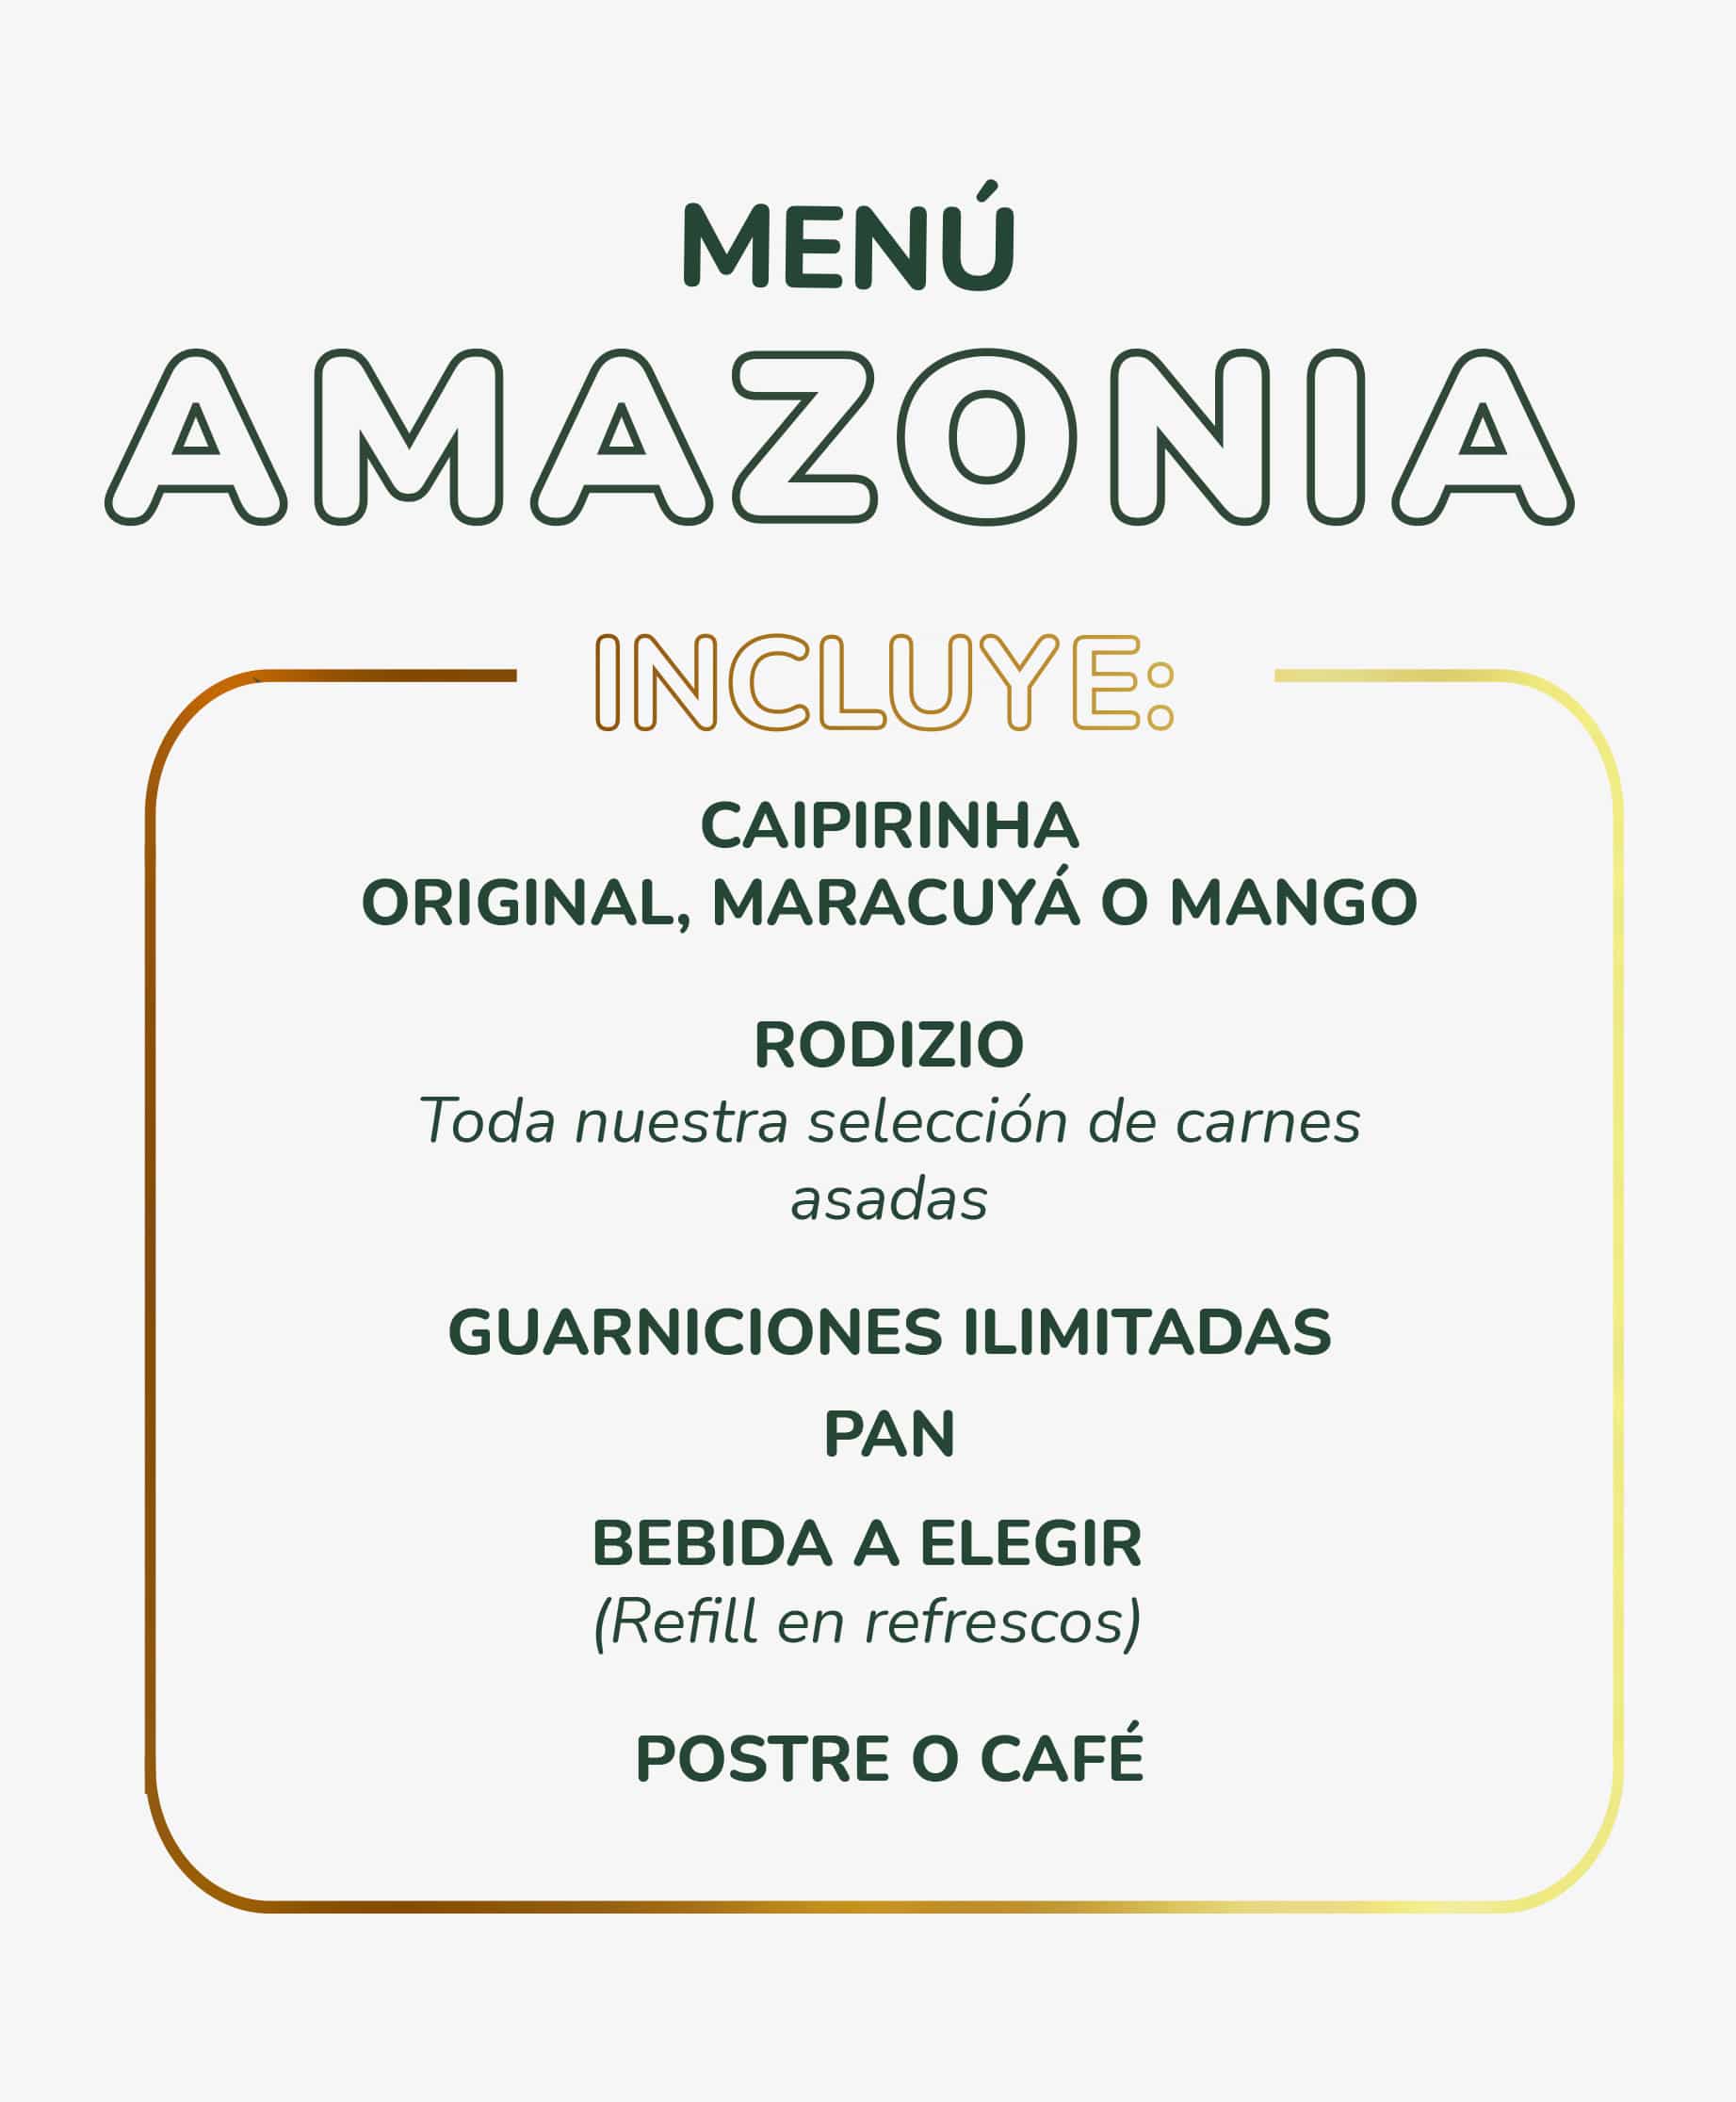 menu amazonia